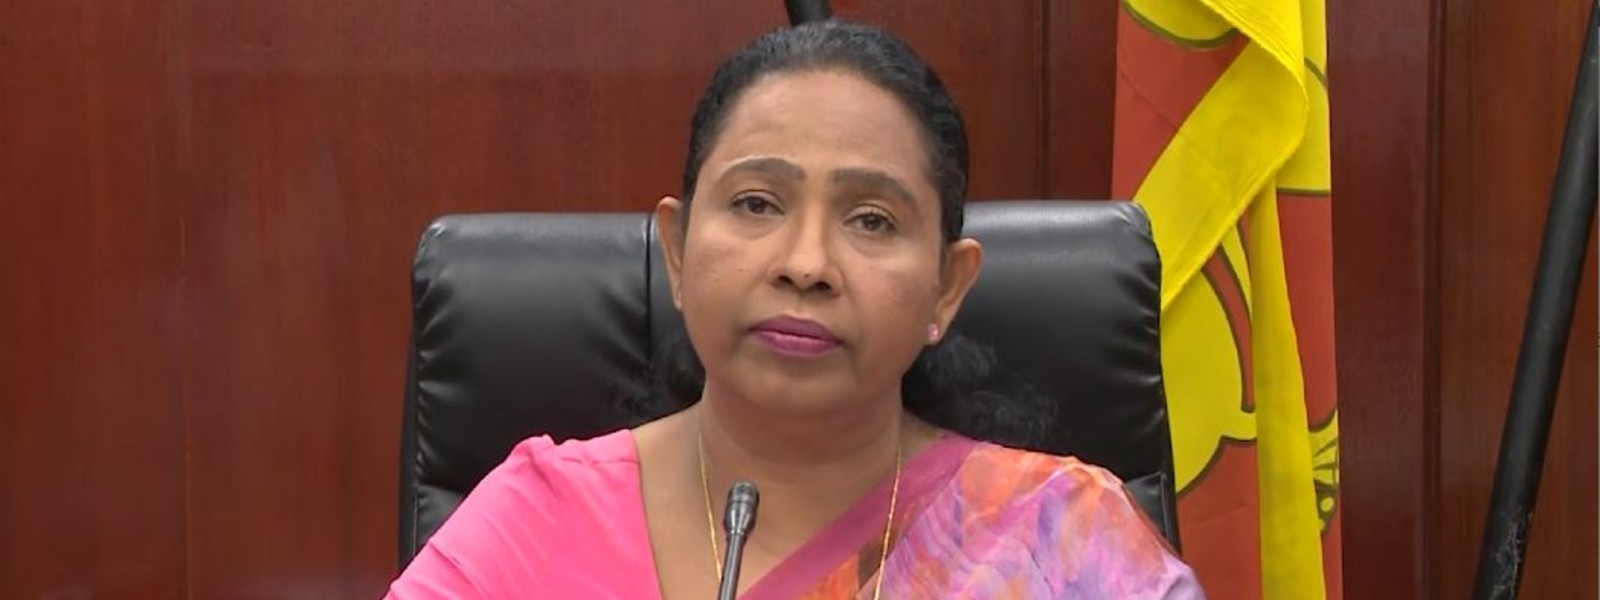 Pavithra Wanniarachchi COVID positive, Health Ministry confirms